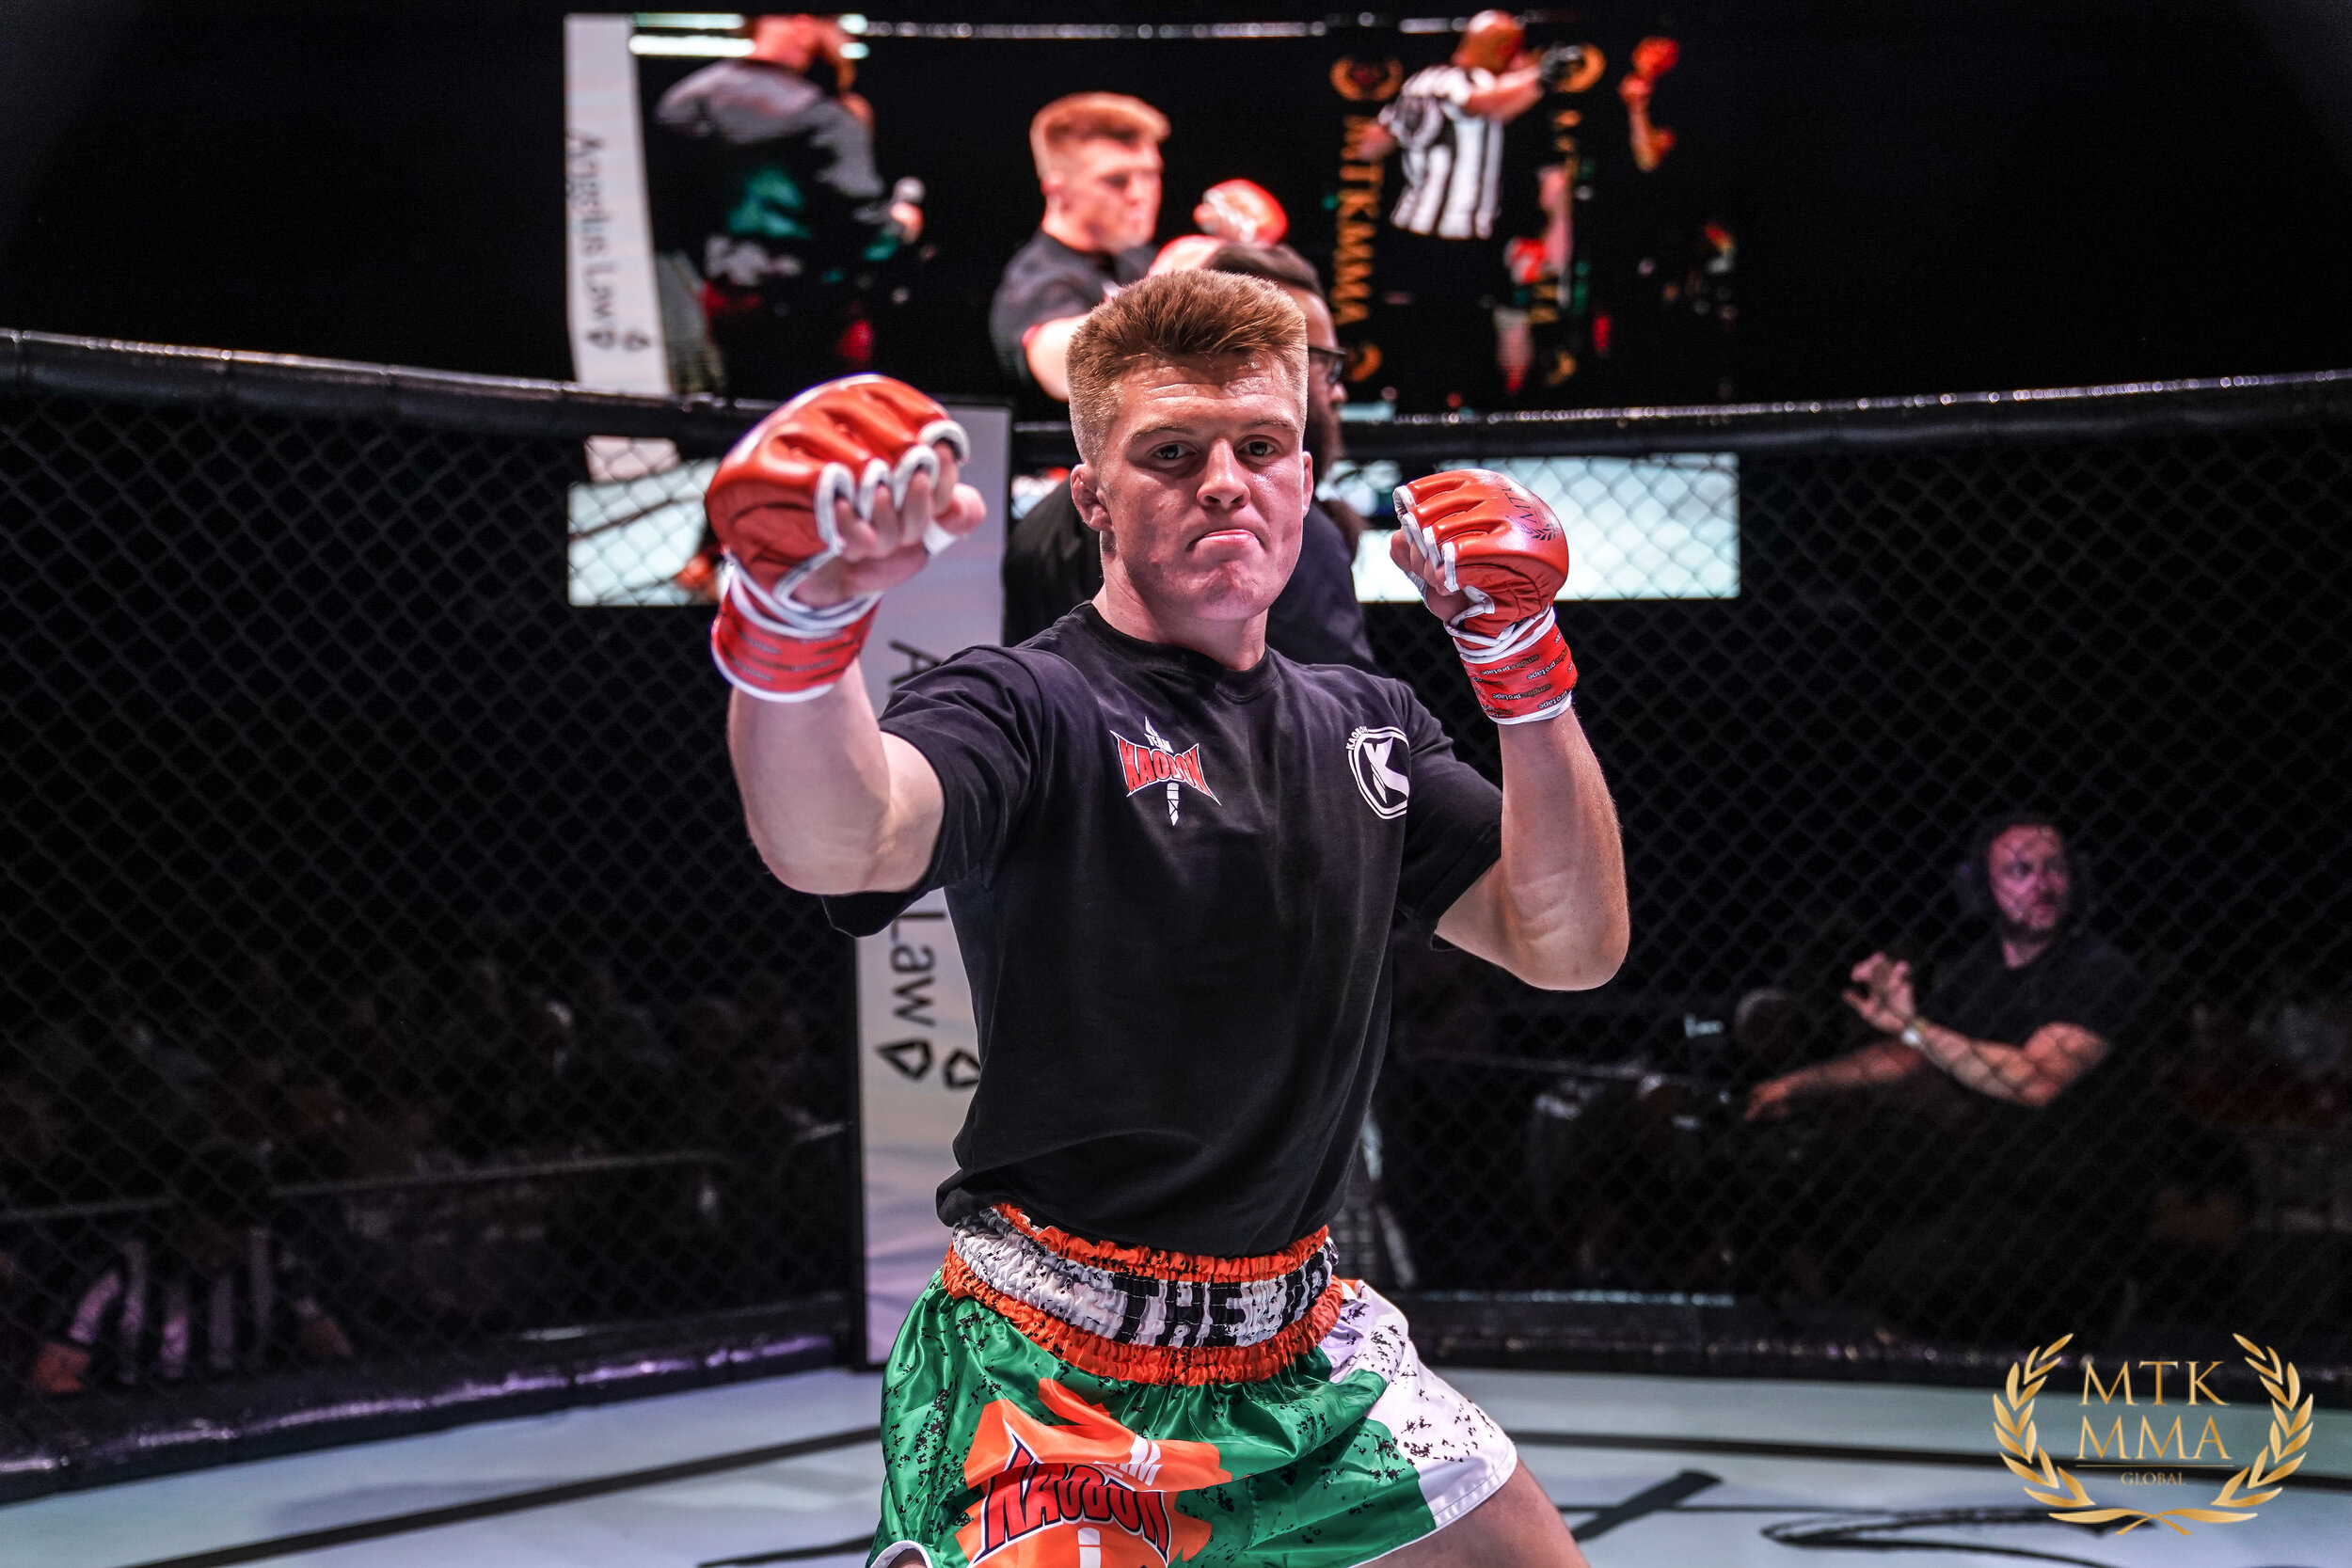 Caolan Loughran - MMA Fighter 